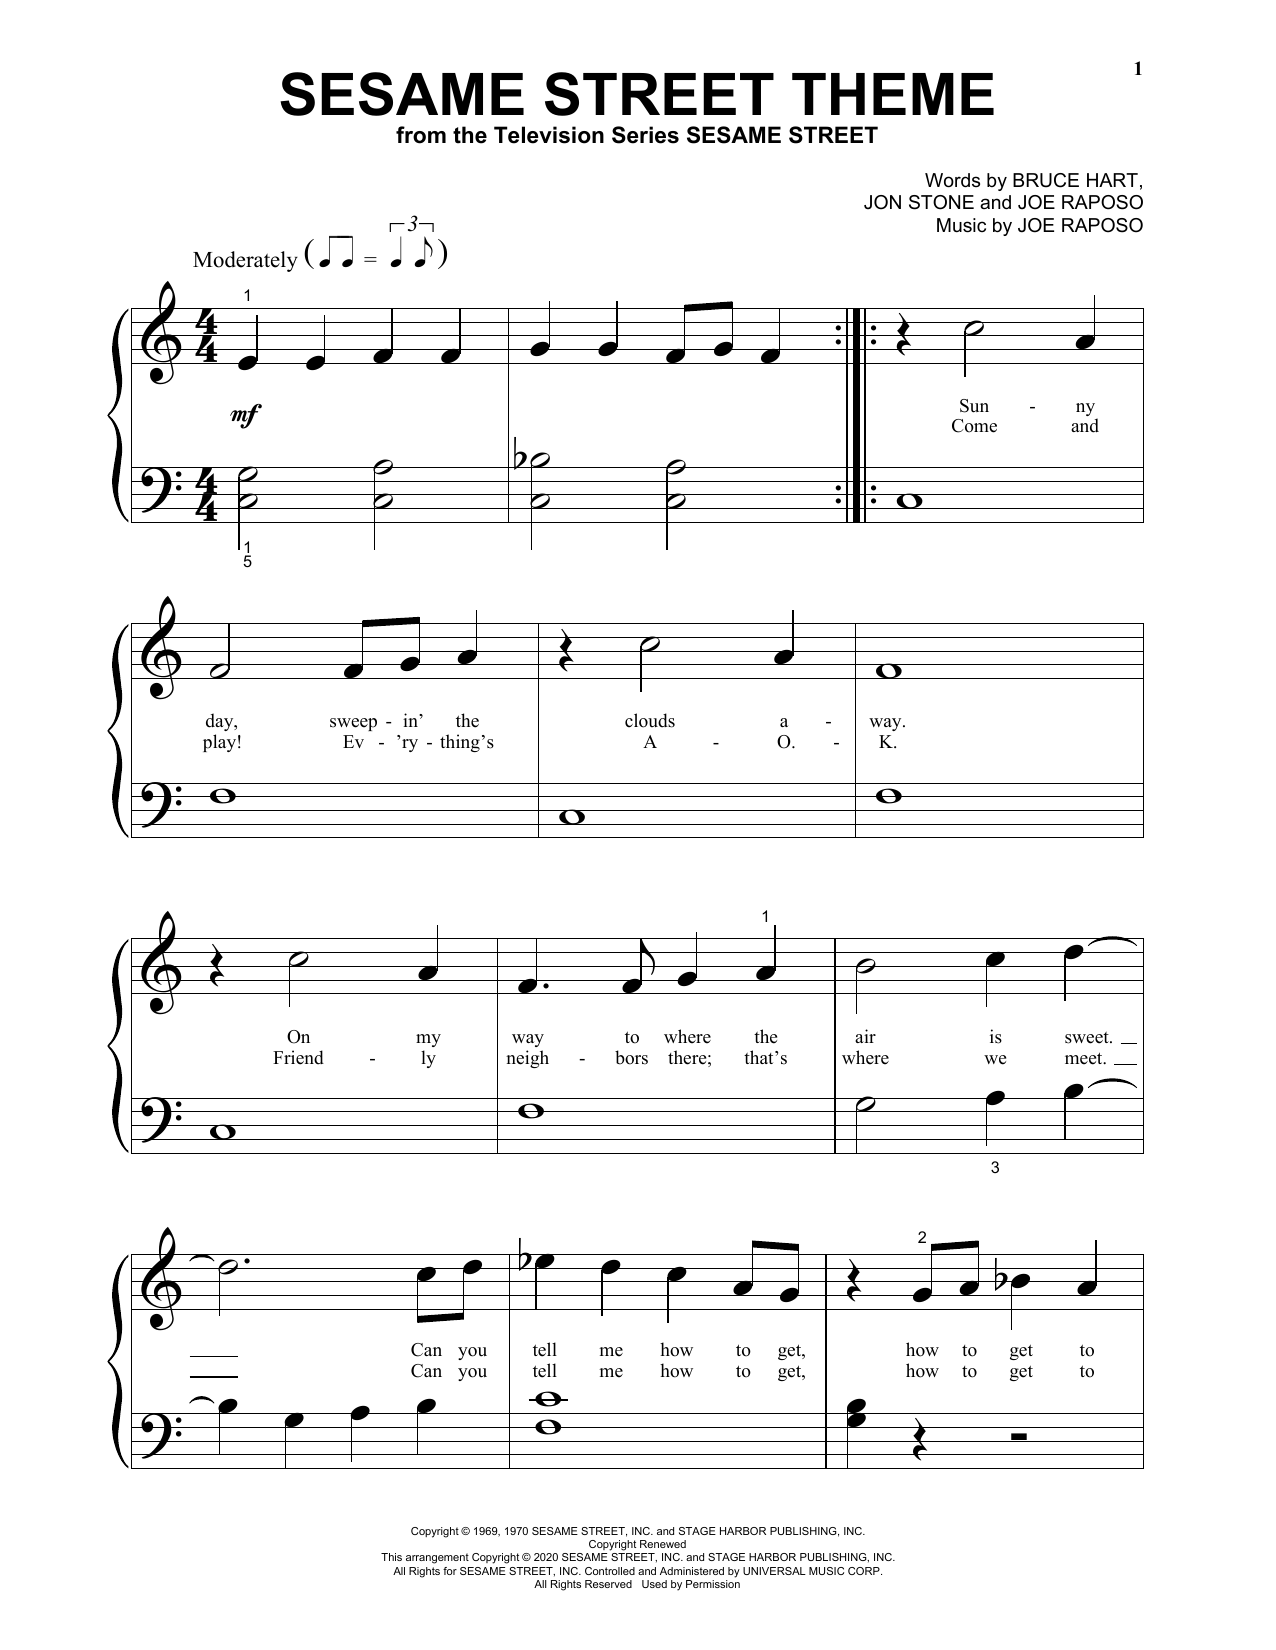 Bruce Hart, Jon Stone and Joe Raposo Sesame Street Theme Sheet Music Notes & Chords for Big Note Piano - Download or Print PDF